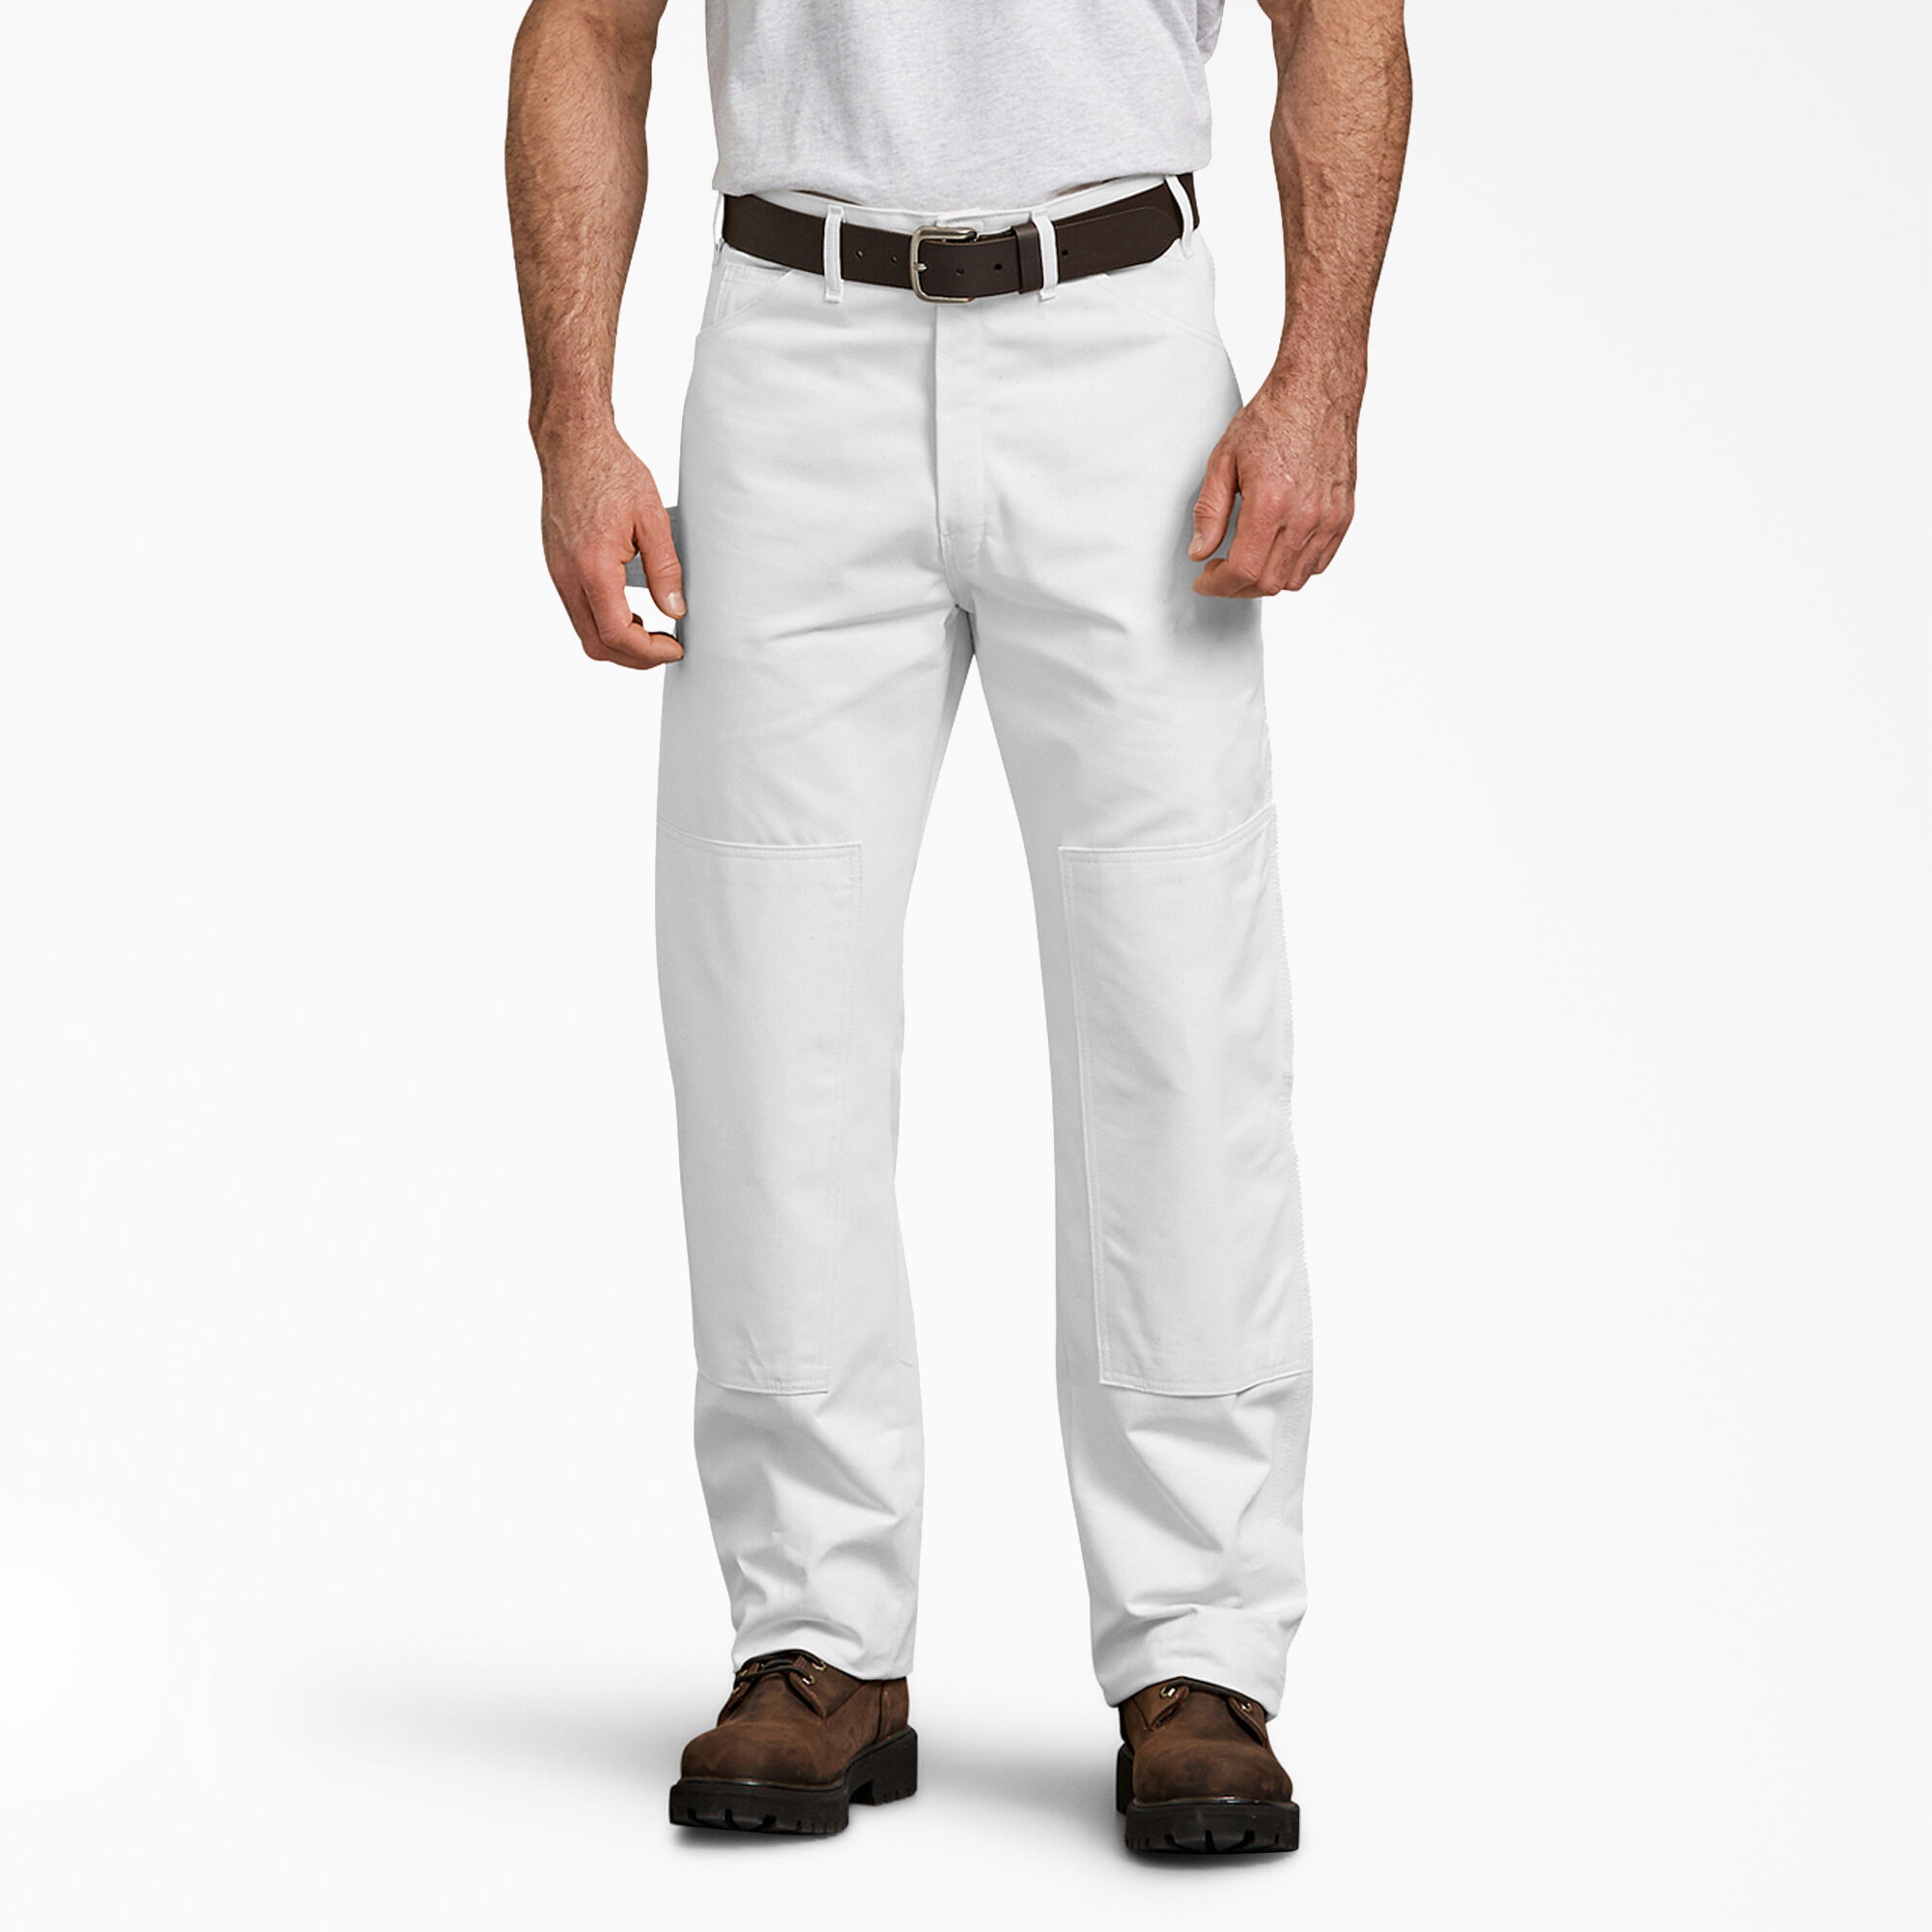 White Jeans for Men | Double Knee 